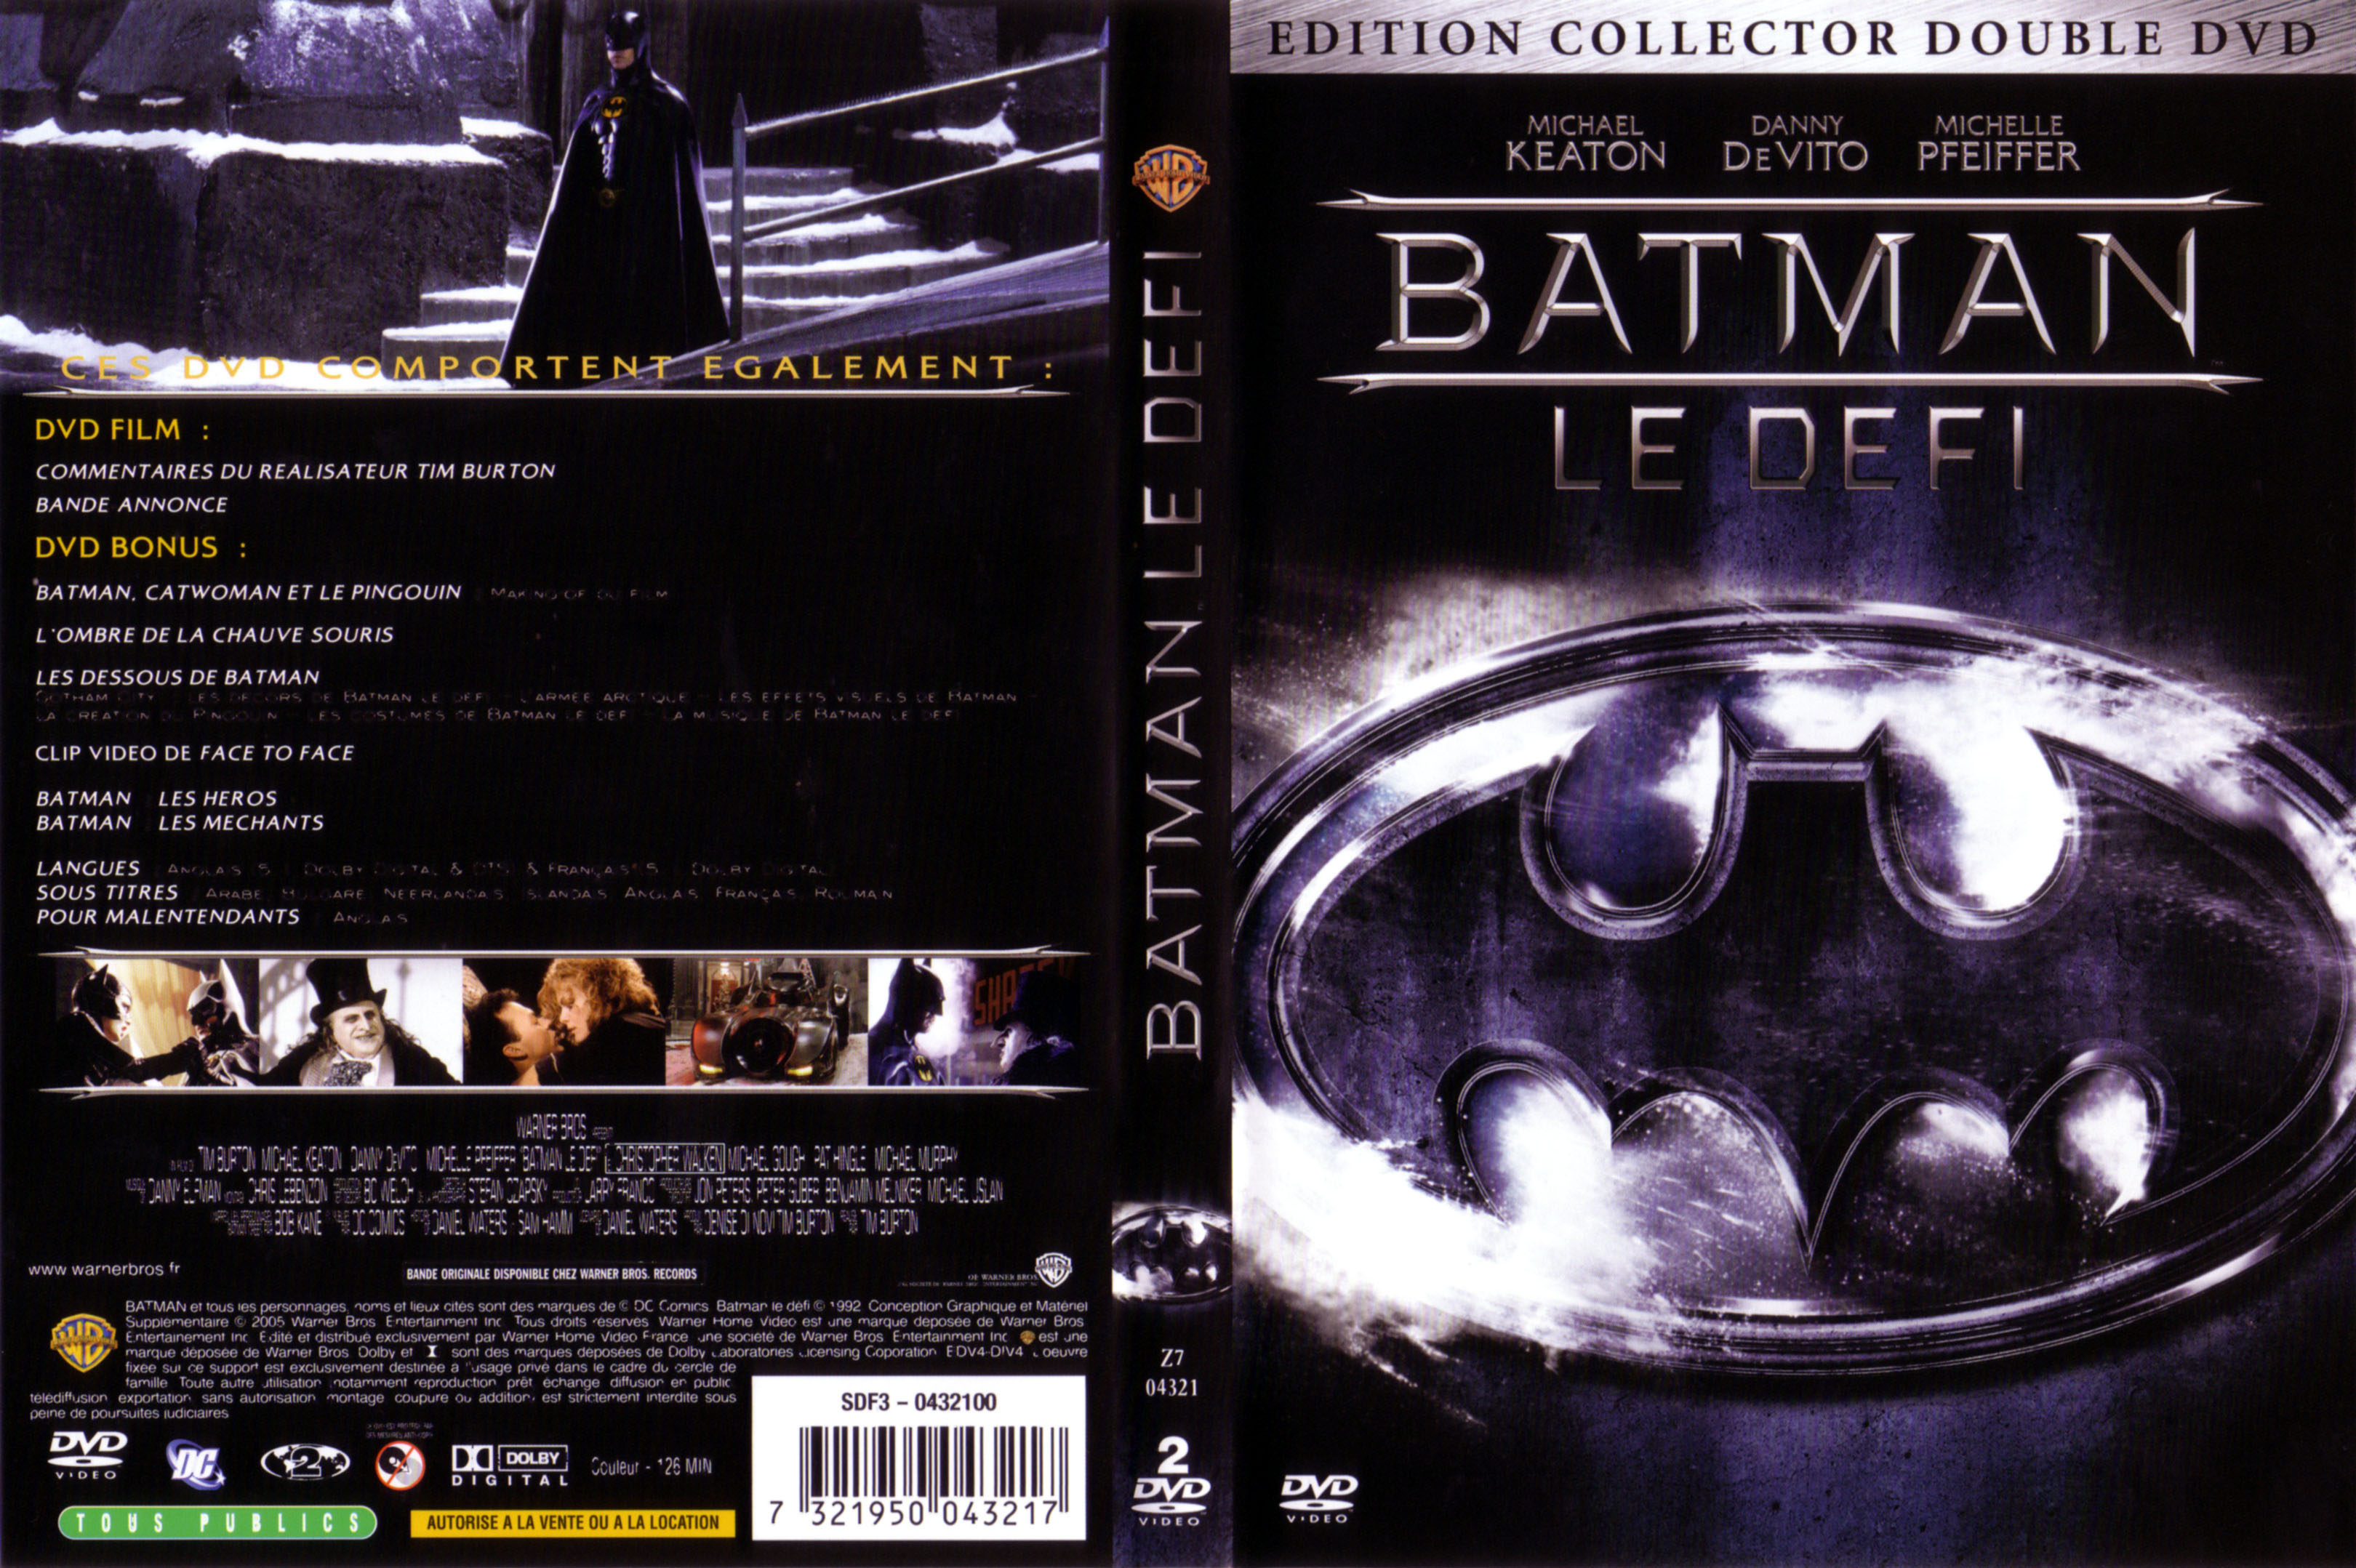 Jaquette DVD Batman le defi v3